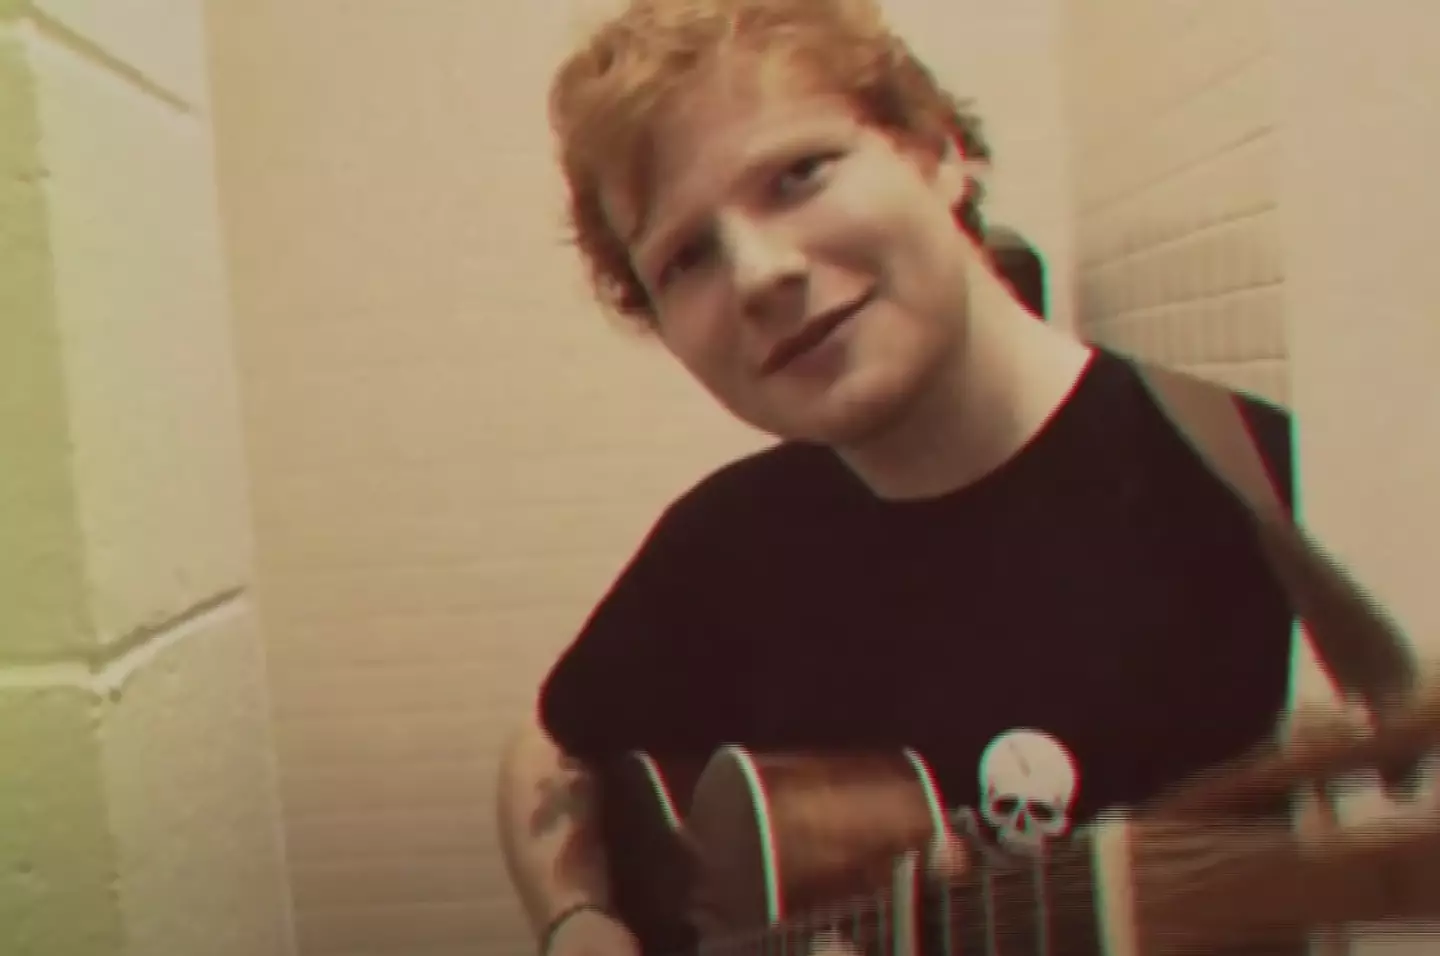 'Photograph' is from Sheeran's second studio album 'x'.